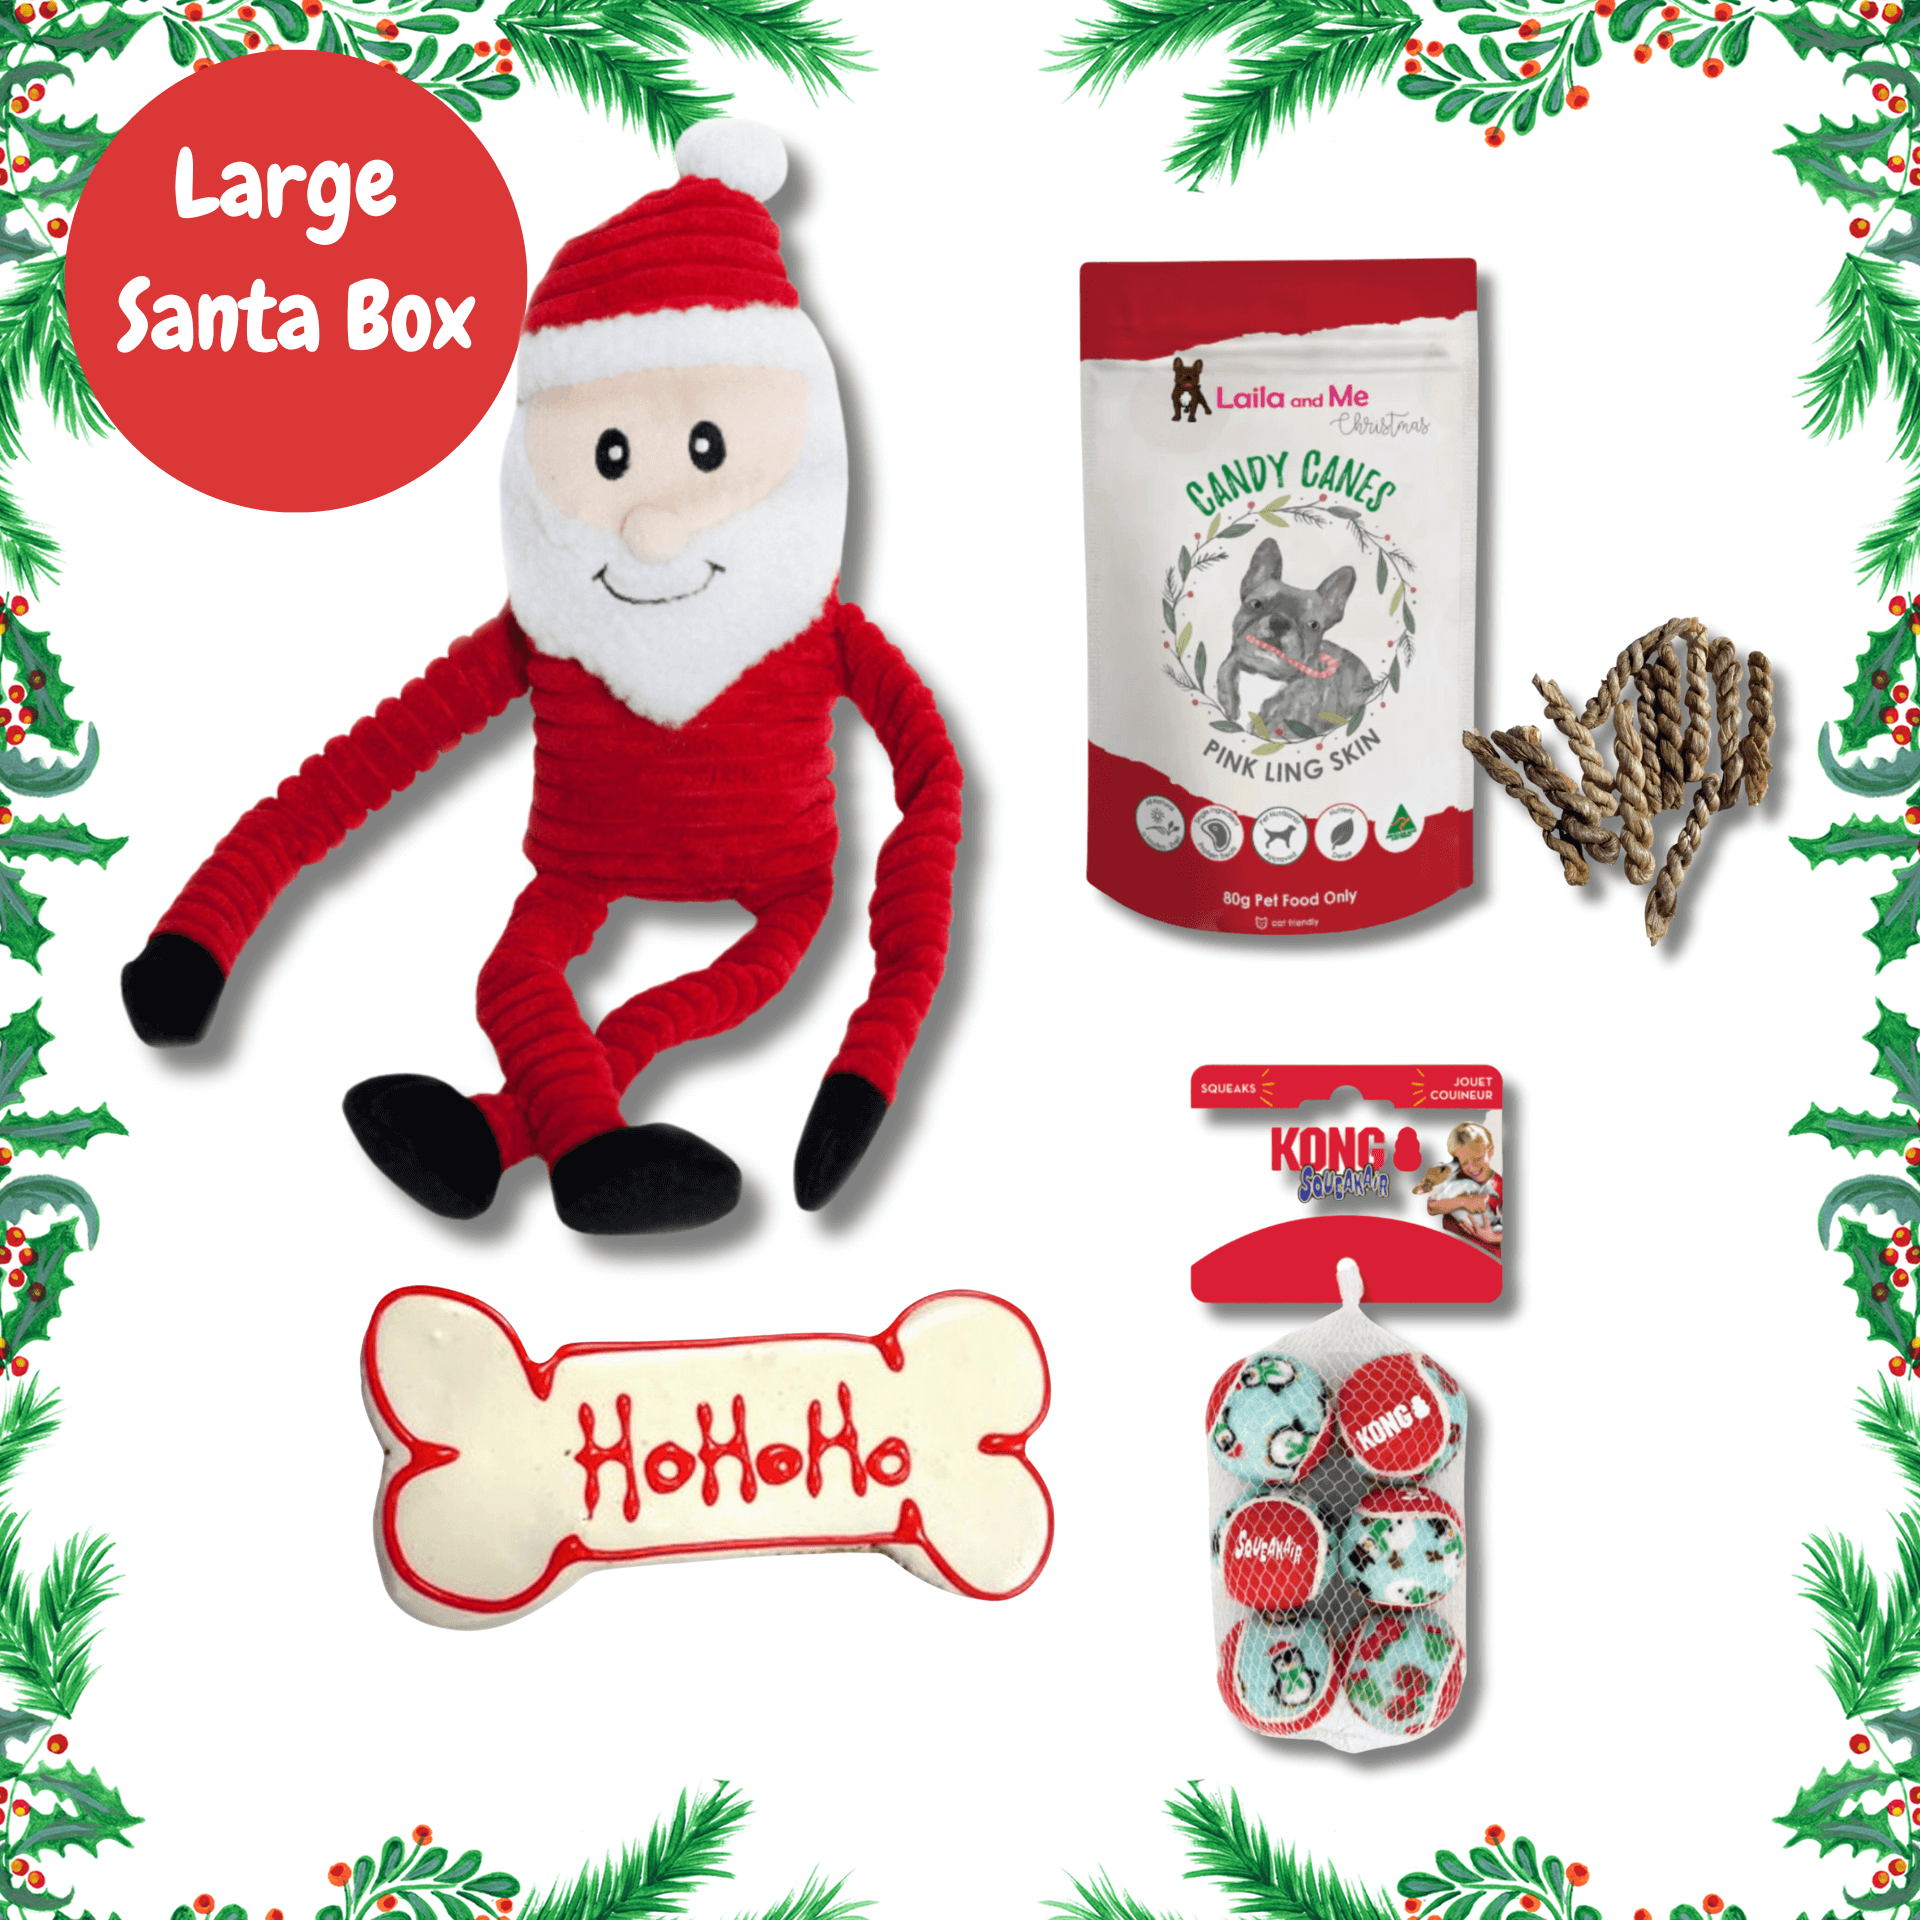 Santa personalised dog gift box, let's pawty